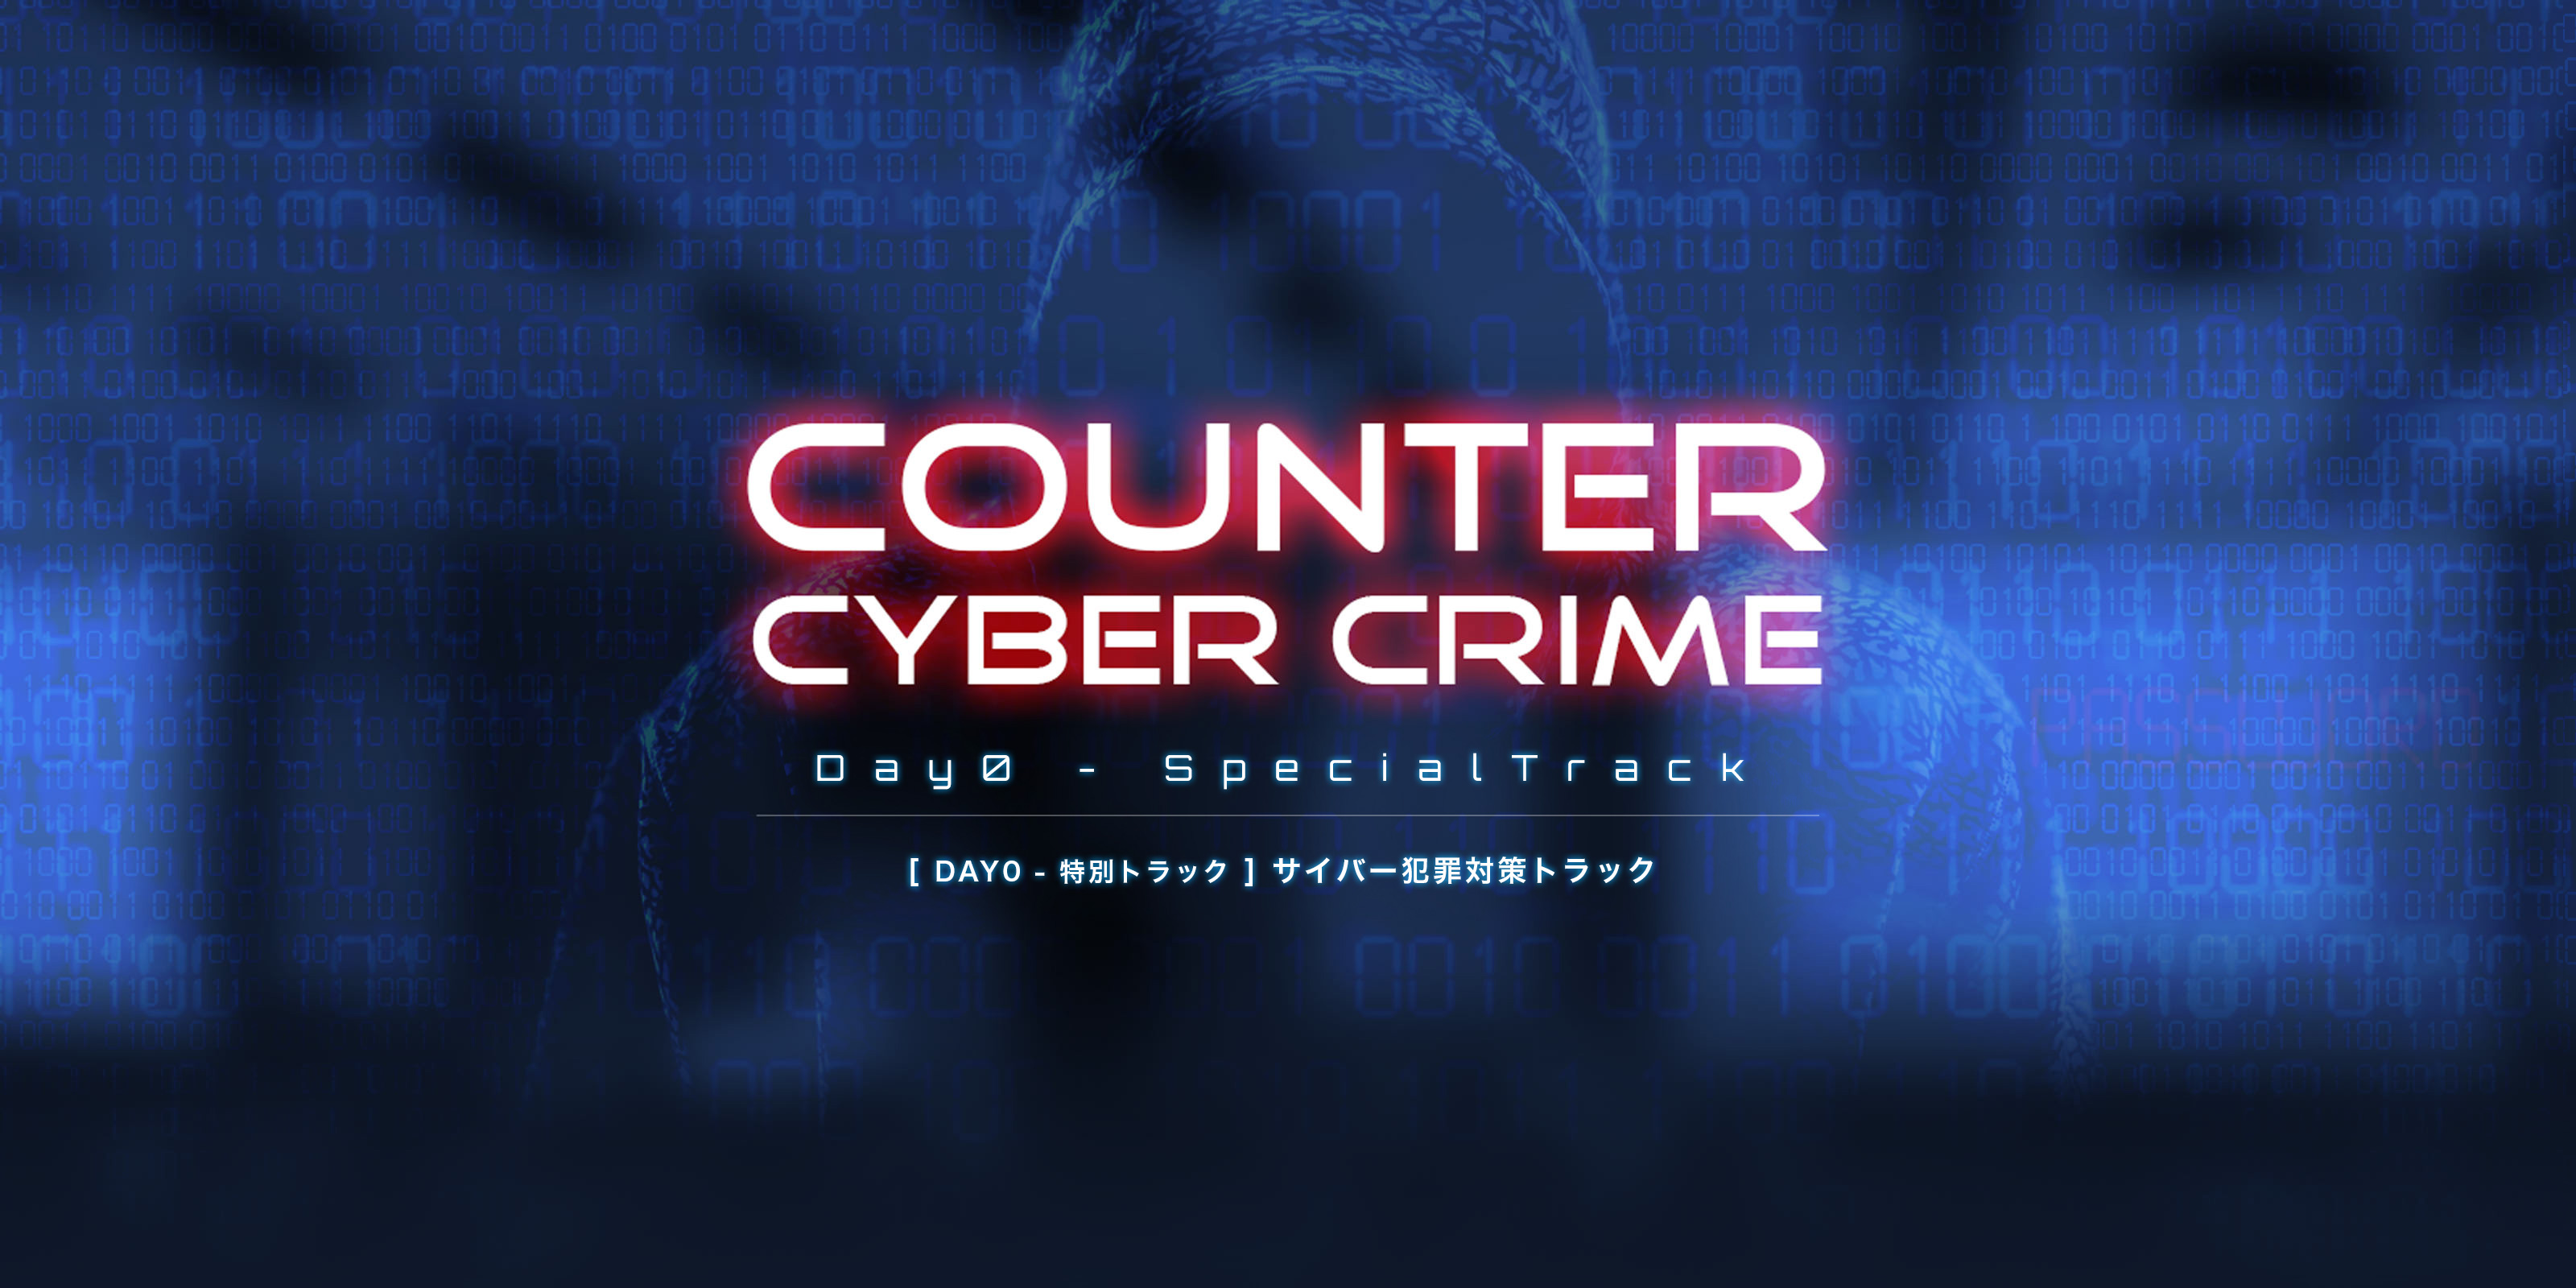 COUNTER CYBER CRIME DAY0 - SPECIALTRACK [ DAY0 - 特別トラック ] サイバー犯罪対策トラック